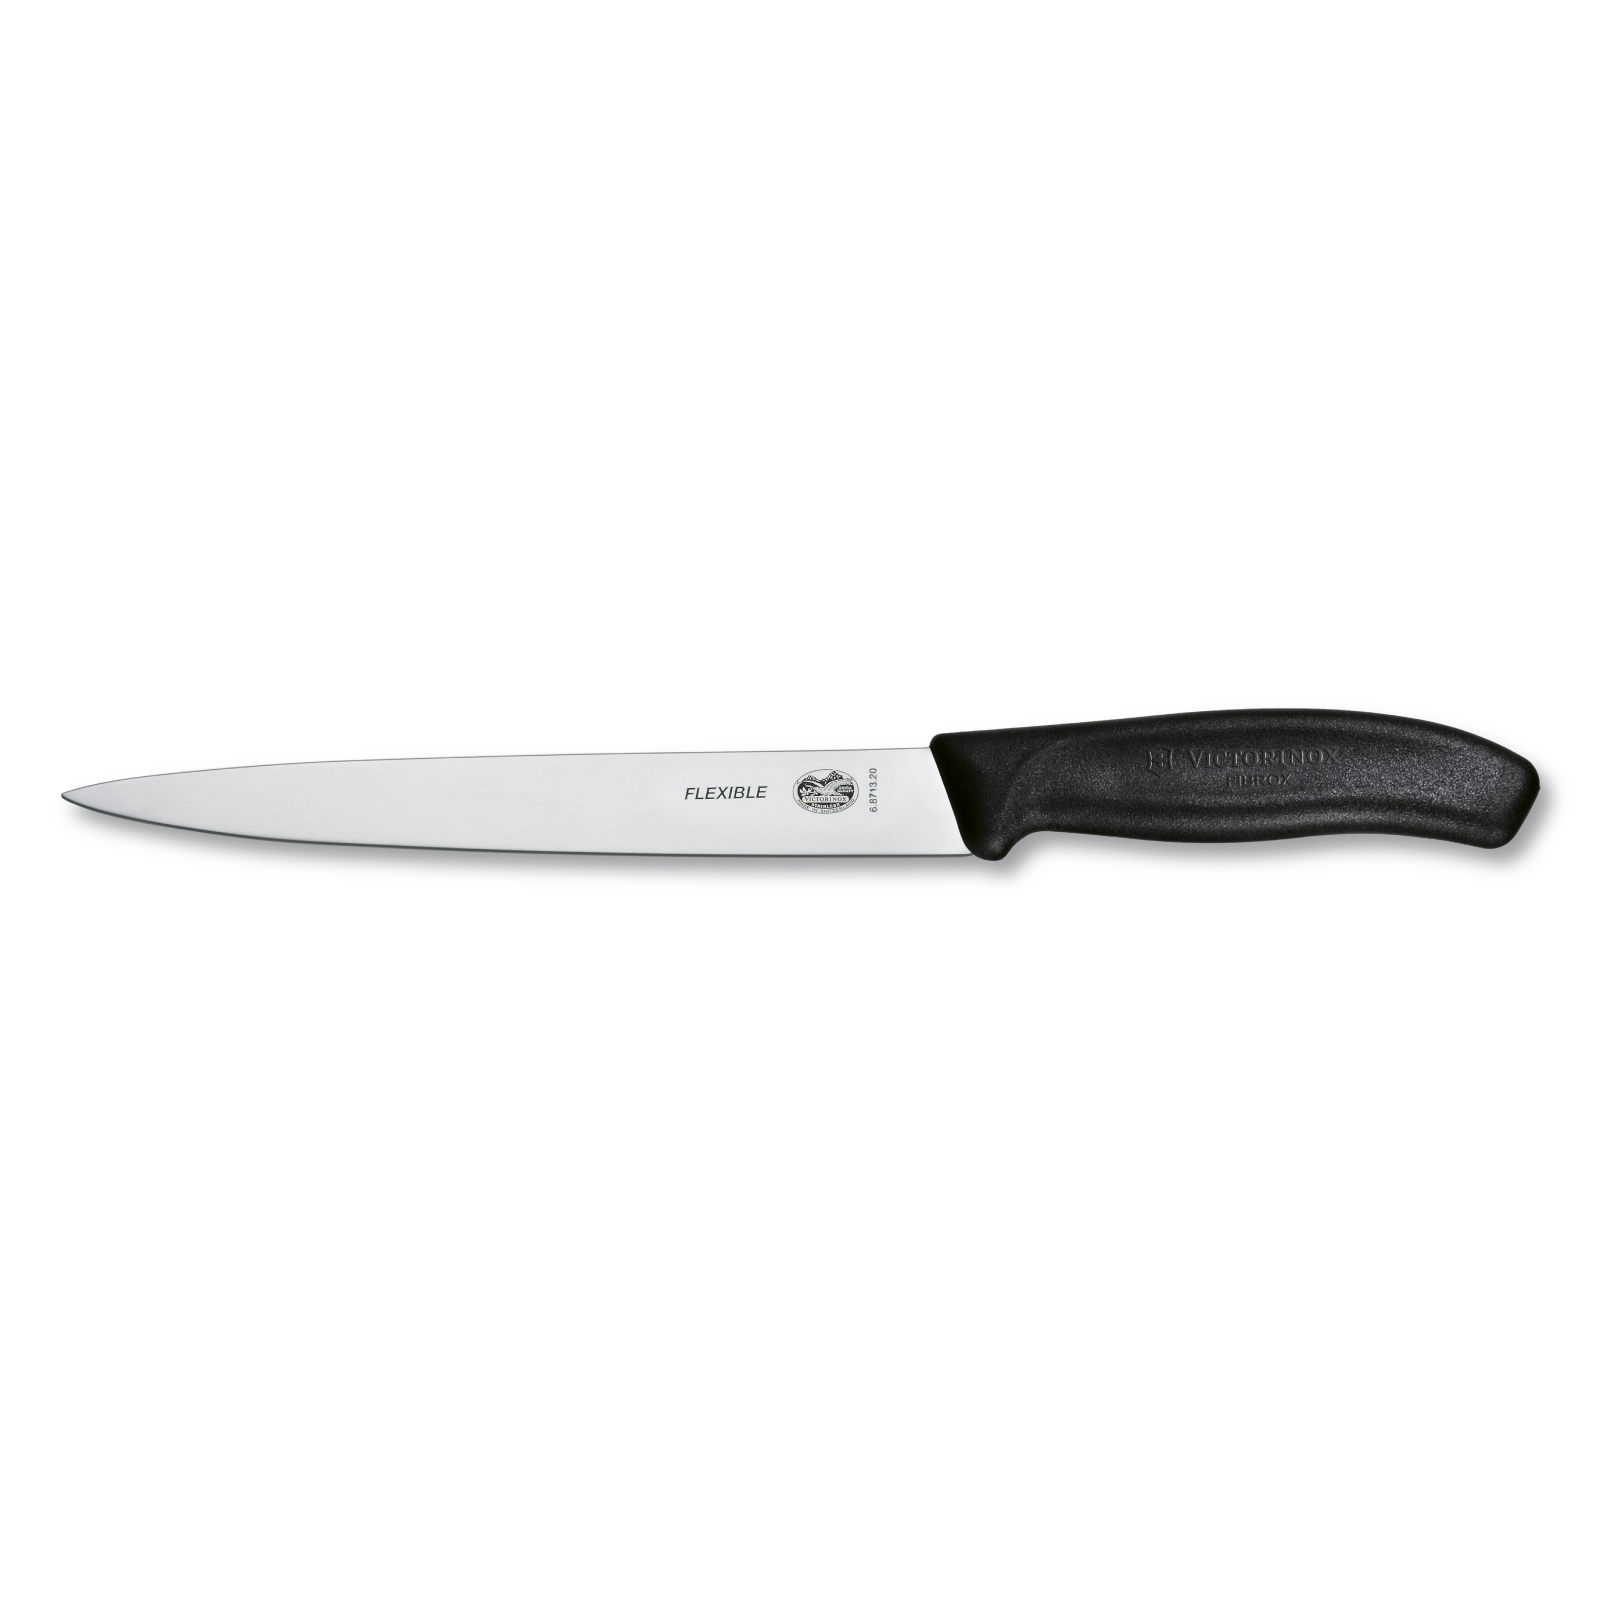  Victorinox Fibrox Tekli Fileto Bıçağı